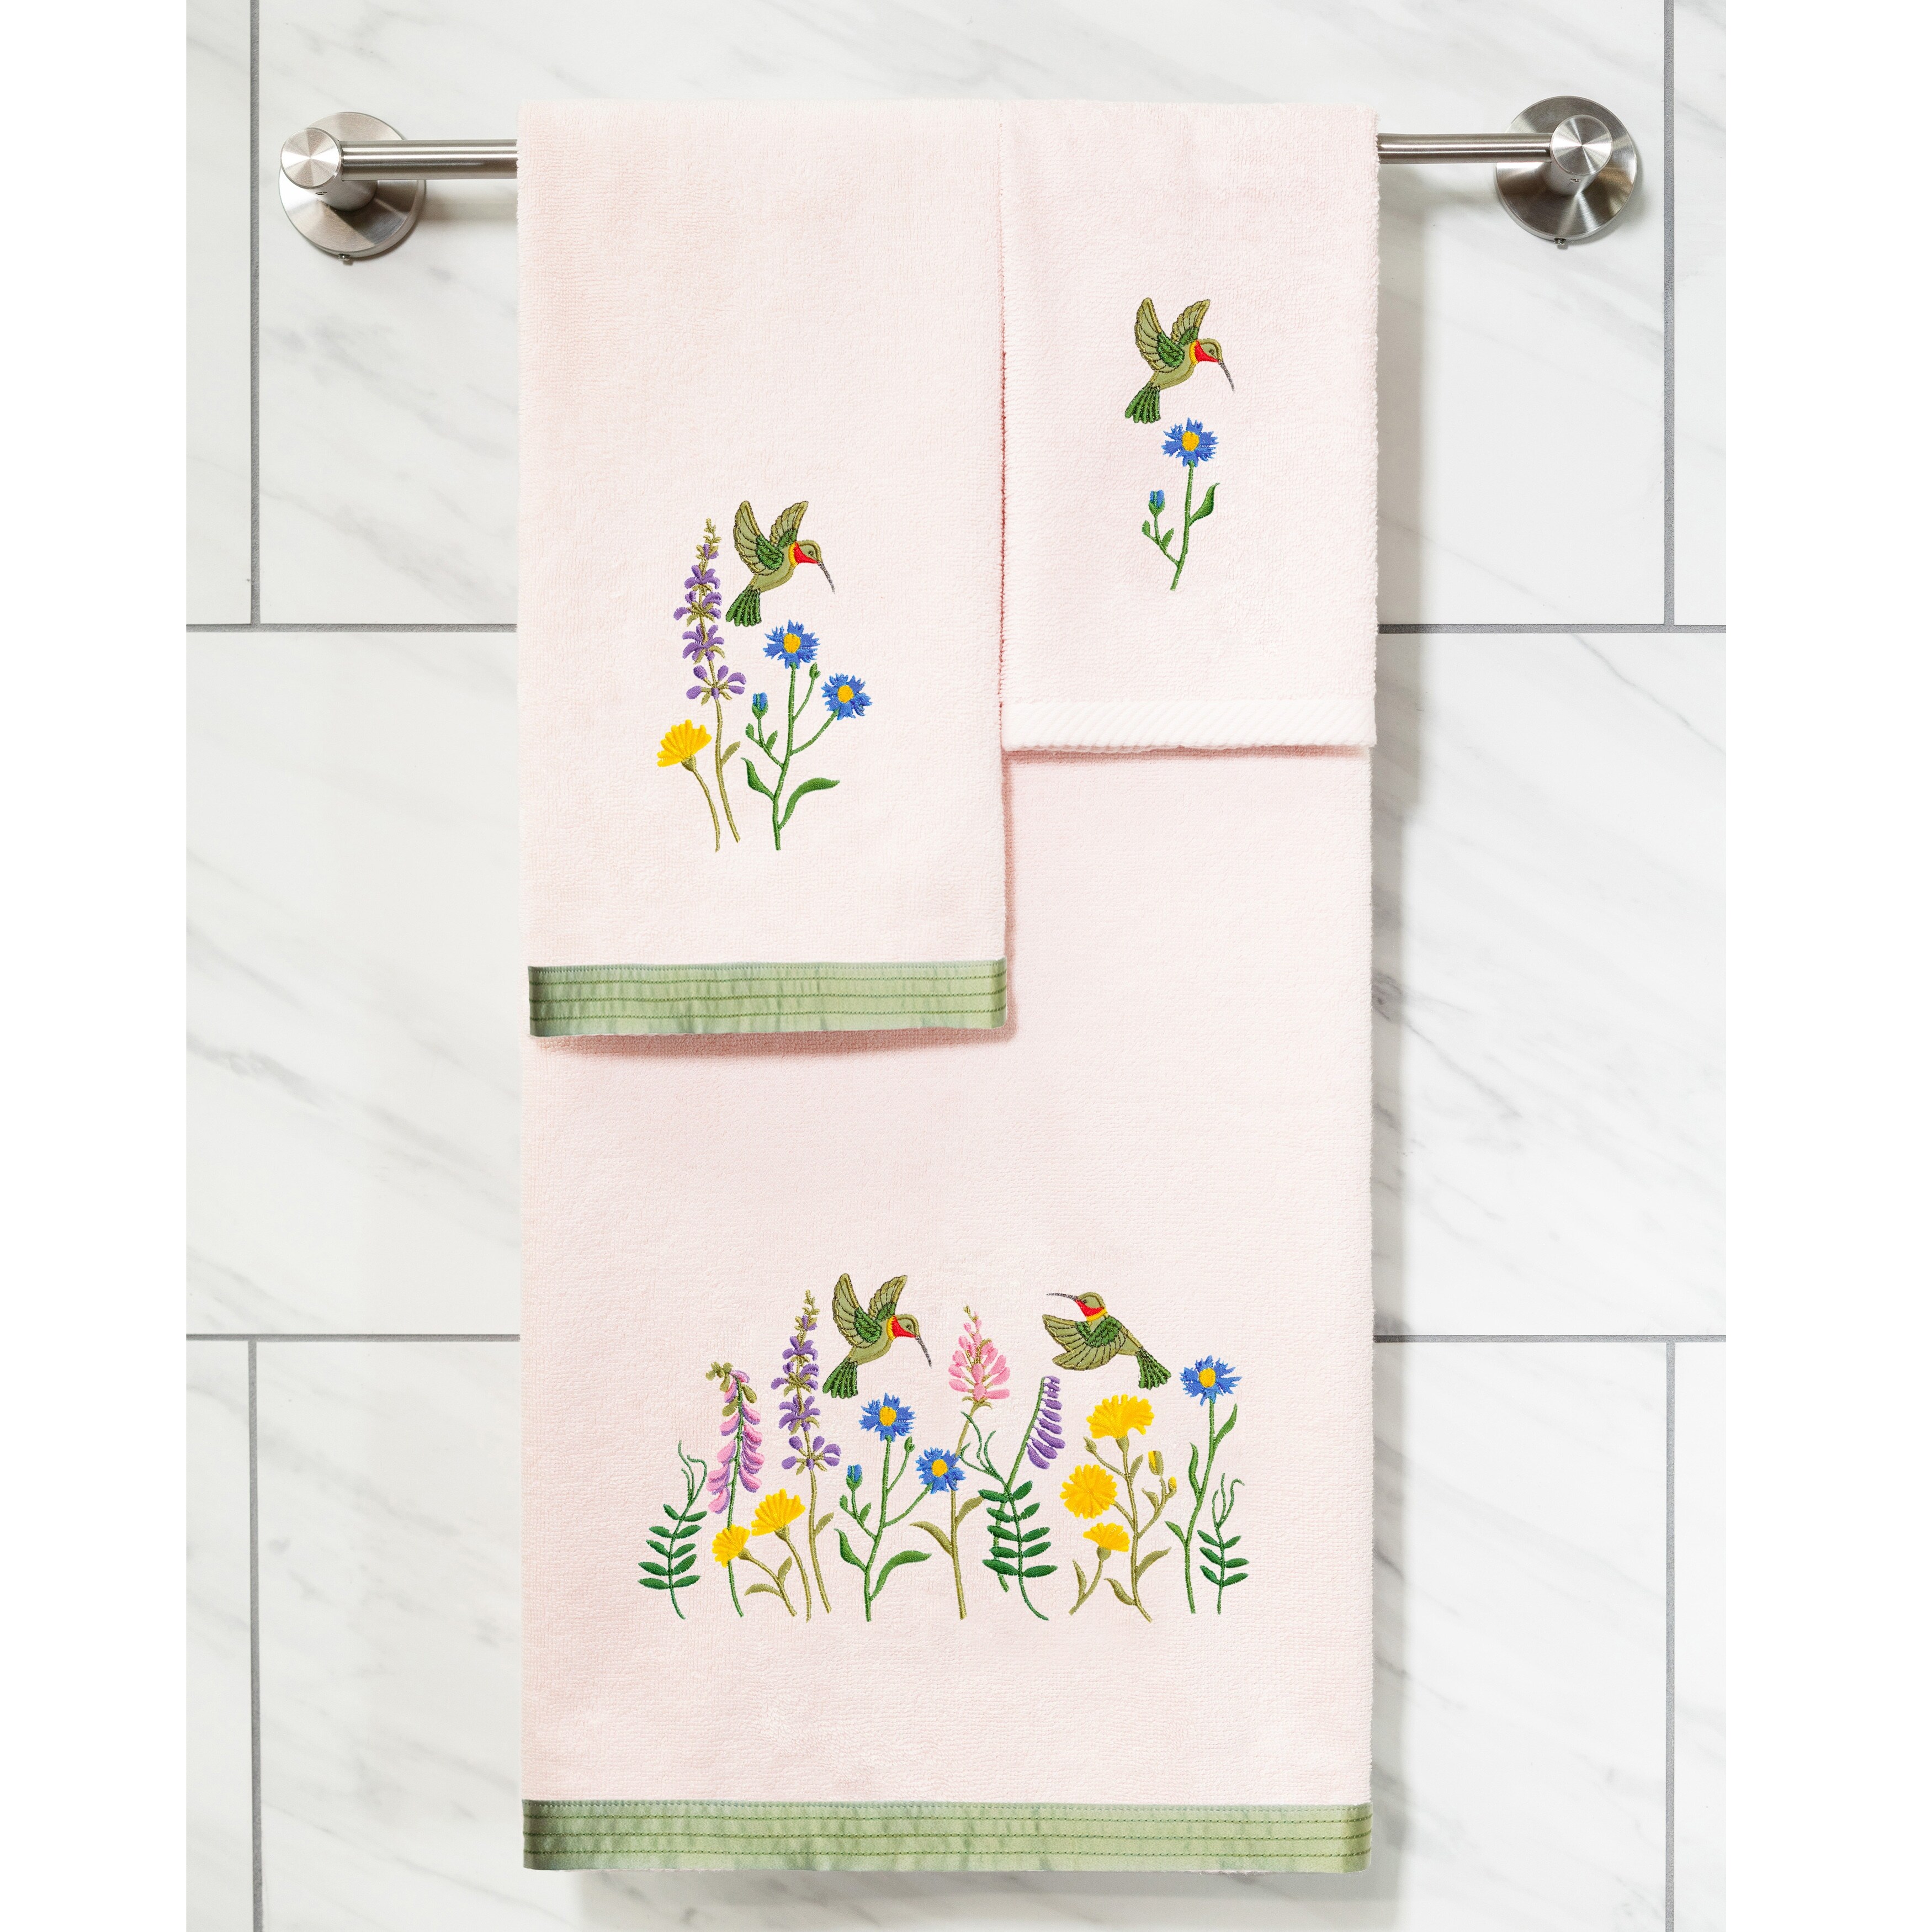 Cotton Paradise Bath Towels, 100% Turkish Cotton 27x54 inch 4 Piece Bath  Towel Sets for Bathroom, Soft Absorbent Towels Clearance Bathroom Set,  Yellow